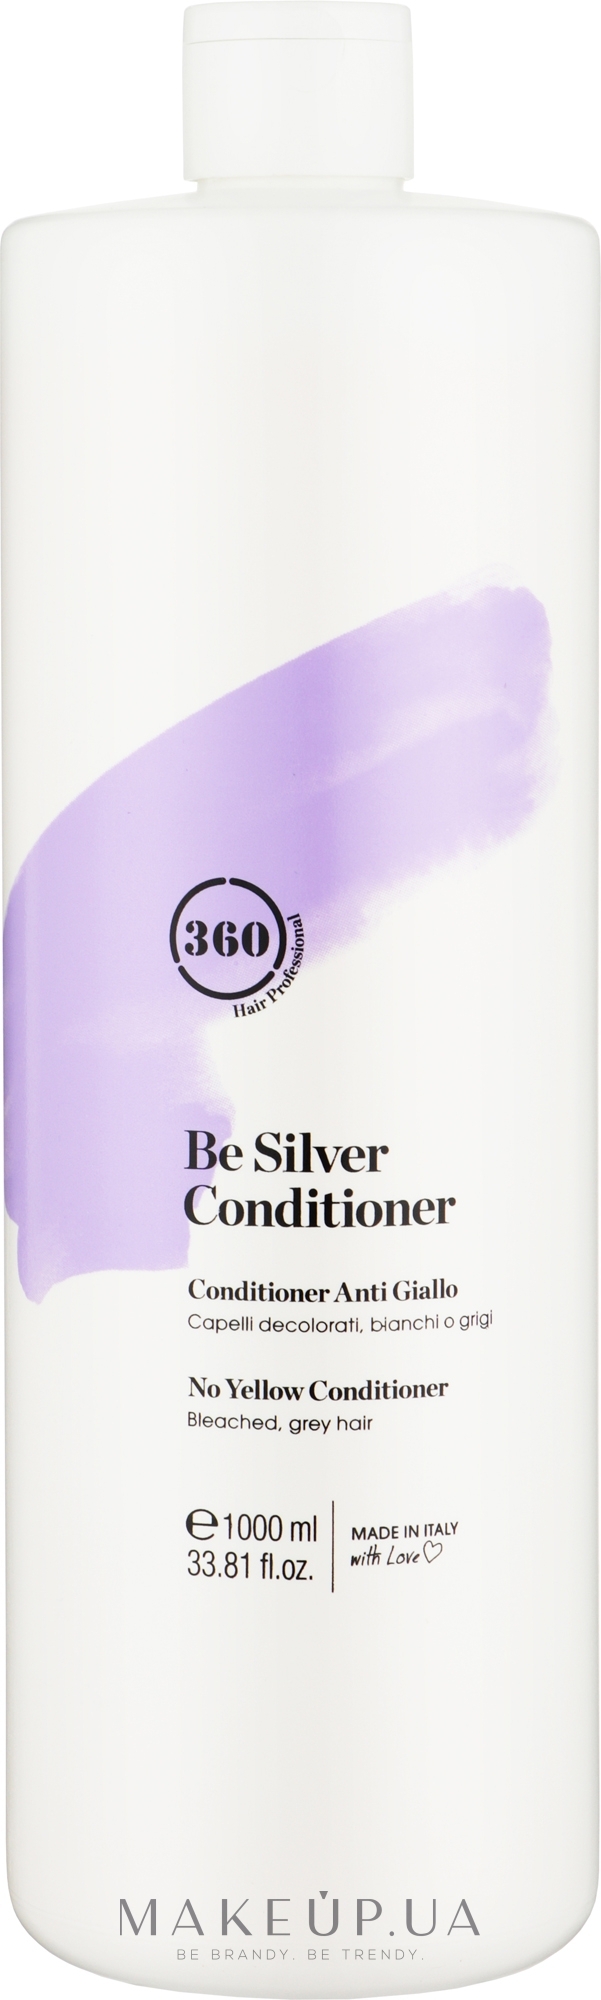 Кондиционер для волос антижелтый "Серебристый блонд" - 360 Be Silver Conditioner — фото 1000ml